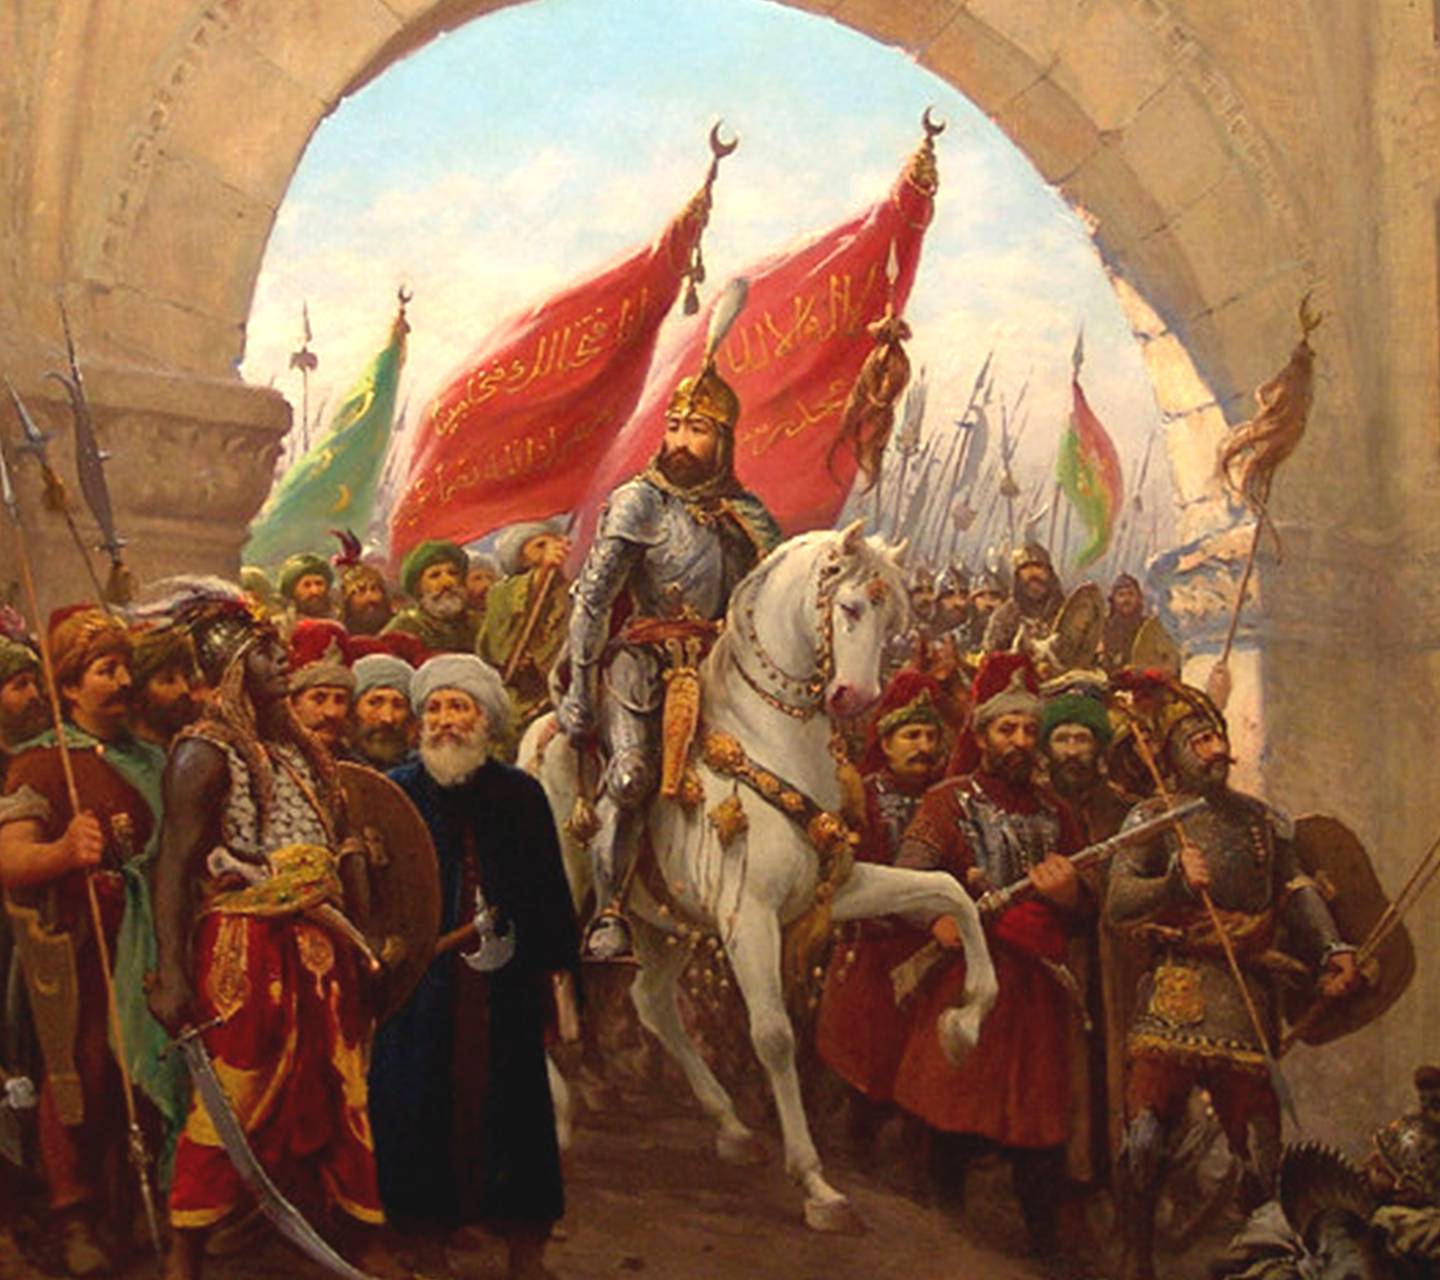 fatih sultan mehmet tapete,gemälde,kunst,veranstaltung,mittelalter,tradition